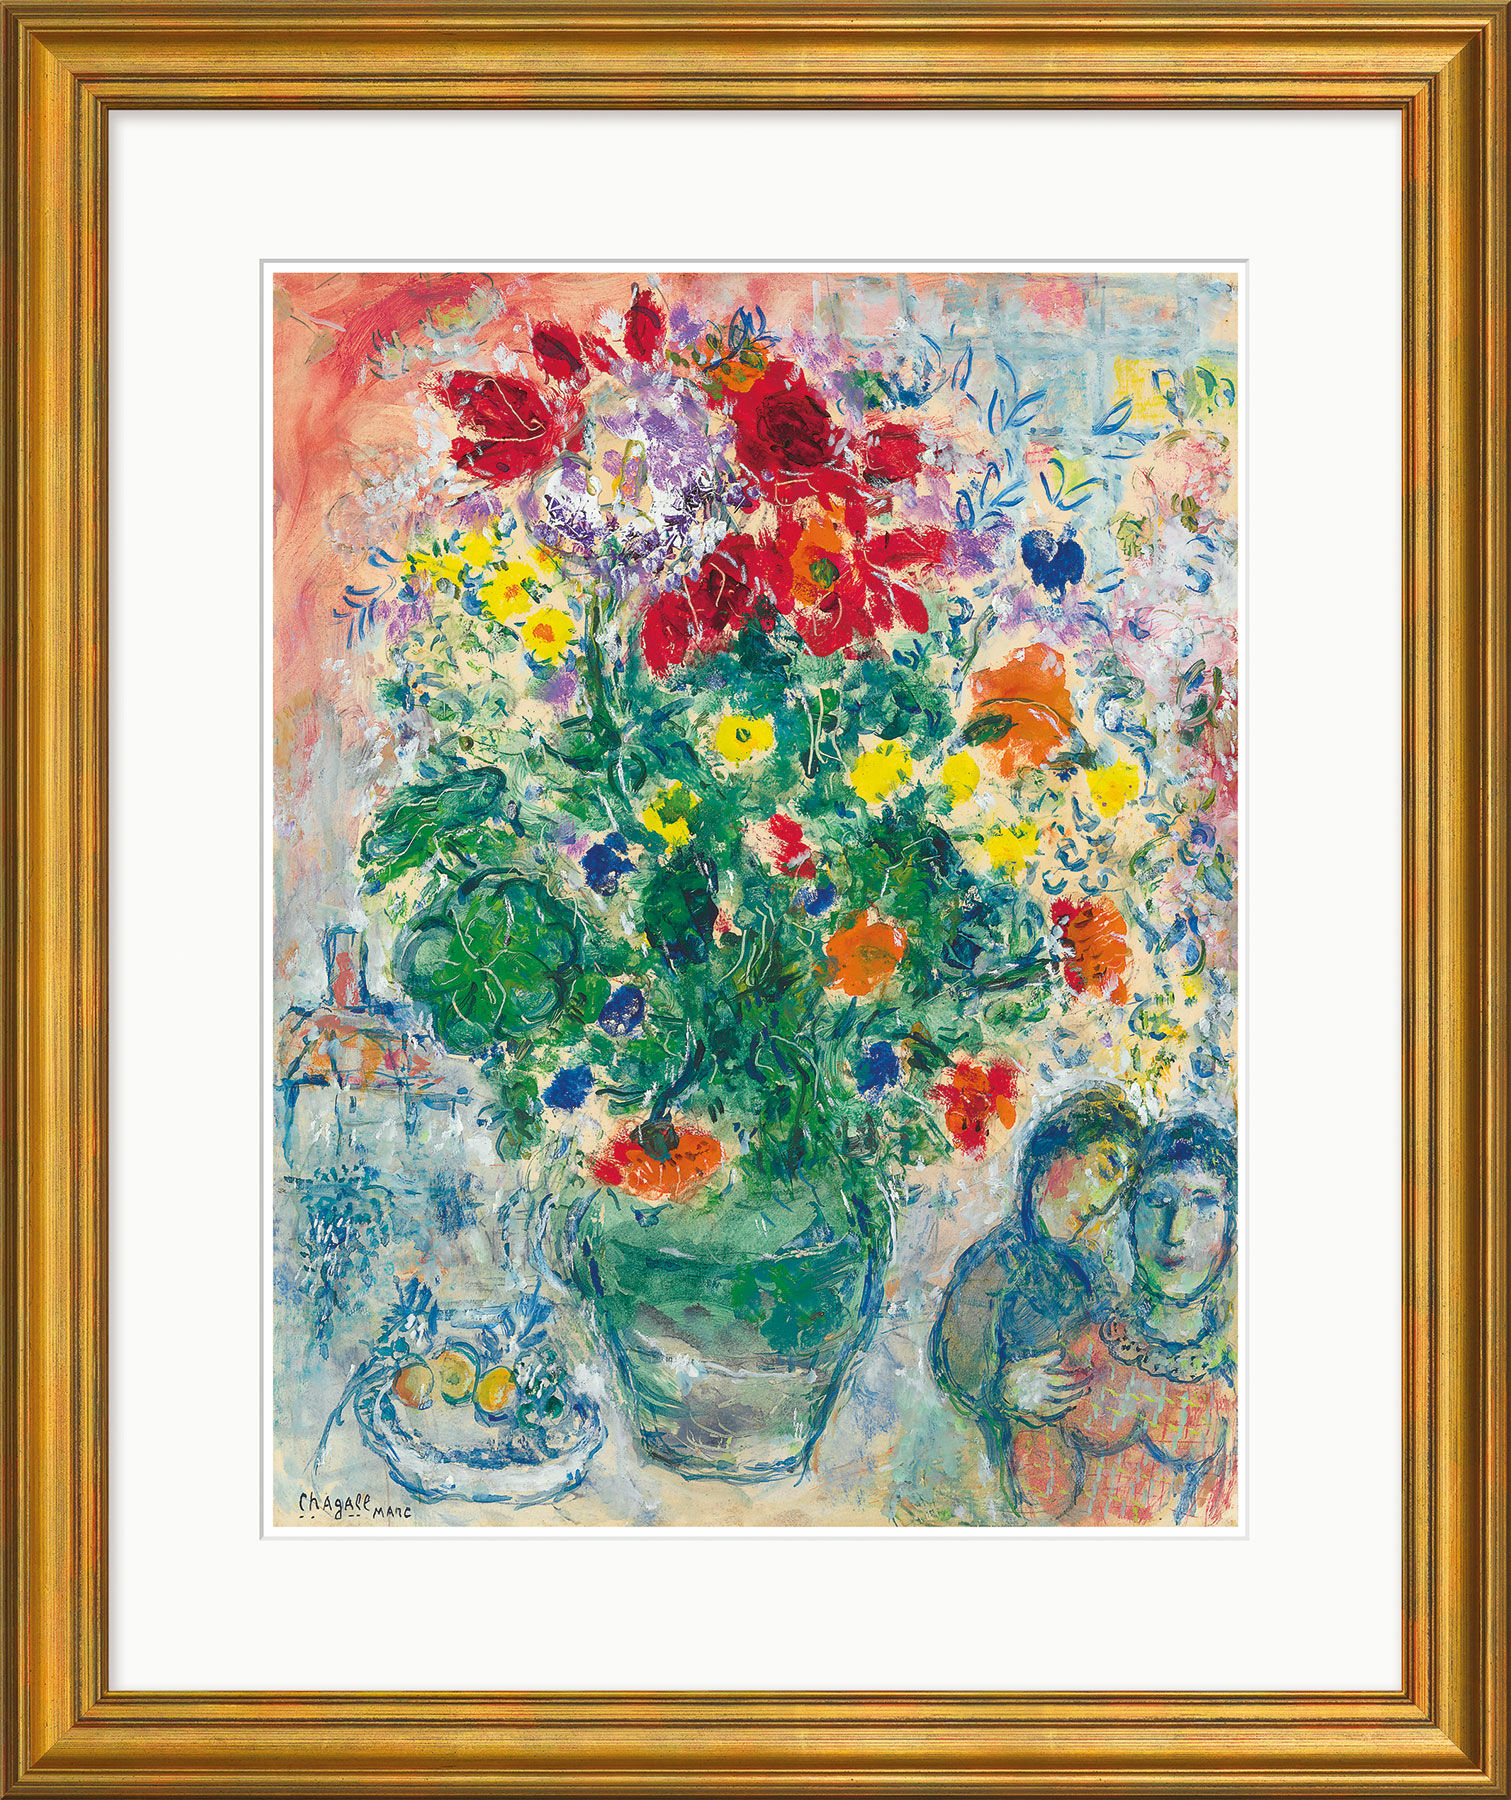 Picture "Bouquet de Renoncules" (1968), golden framed version by Marc Chagall